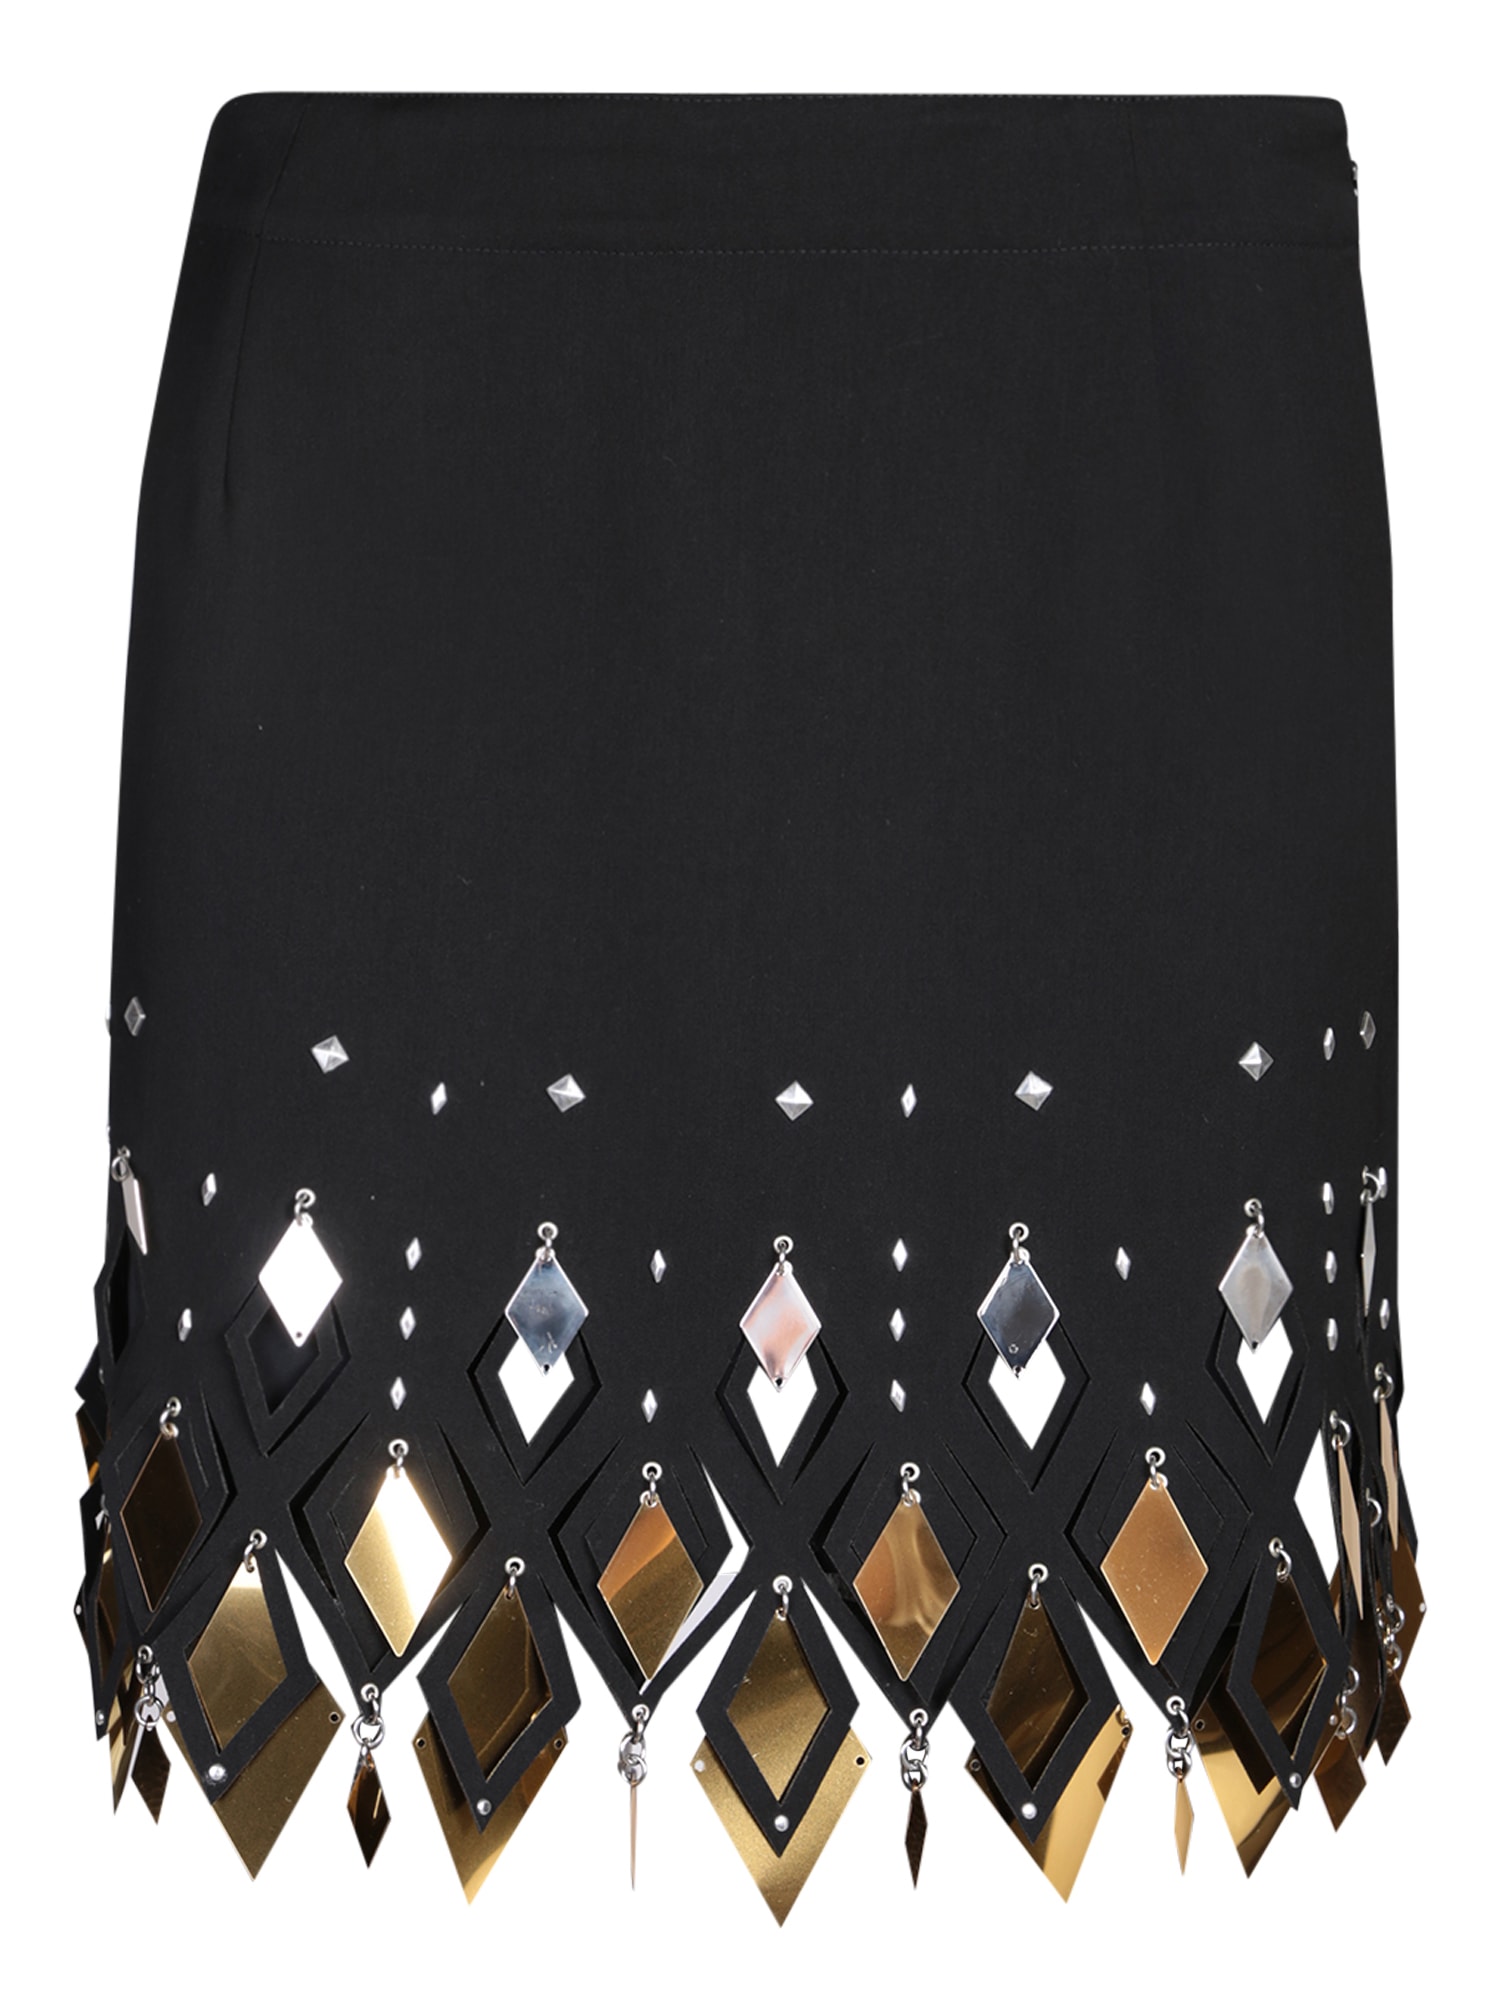 Black Mini Skirt With Diamond Shaped Appliqués